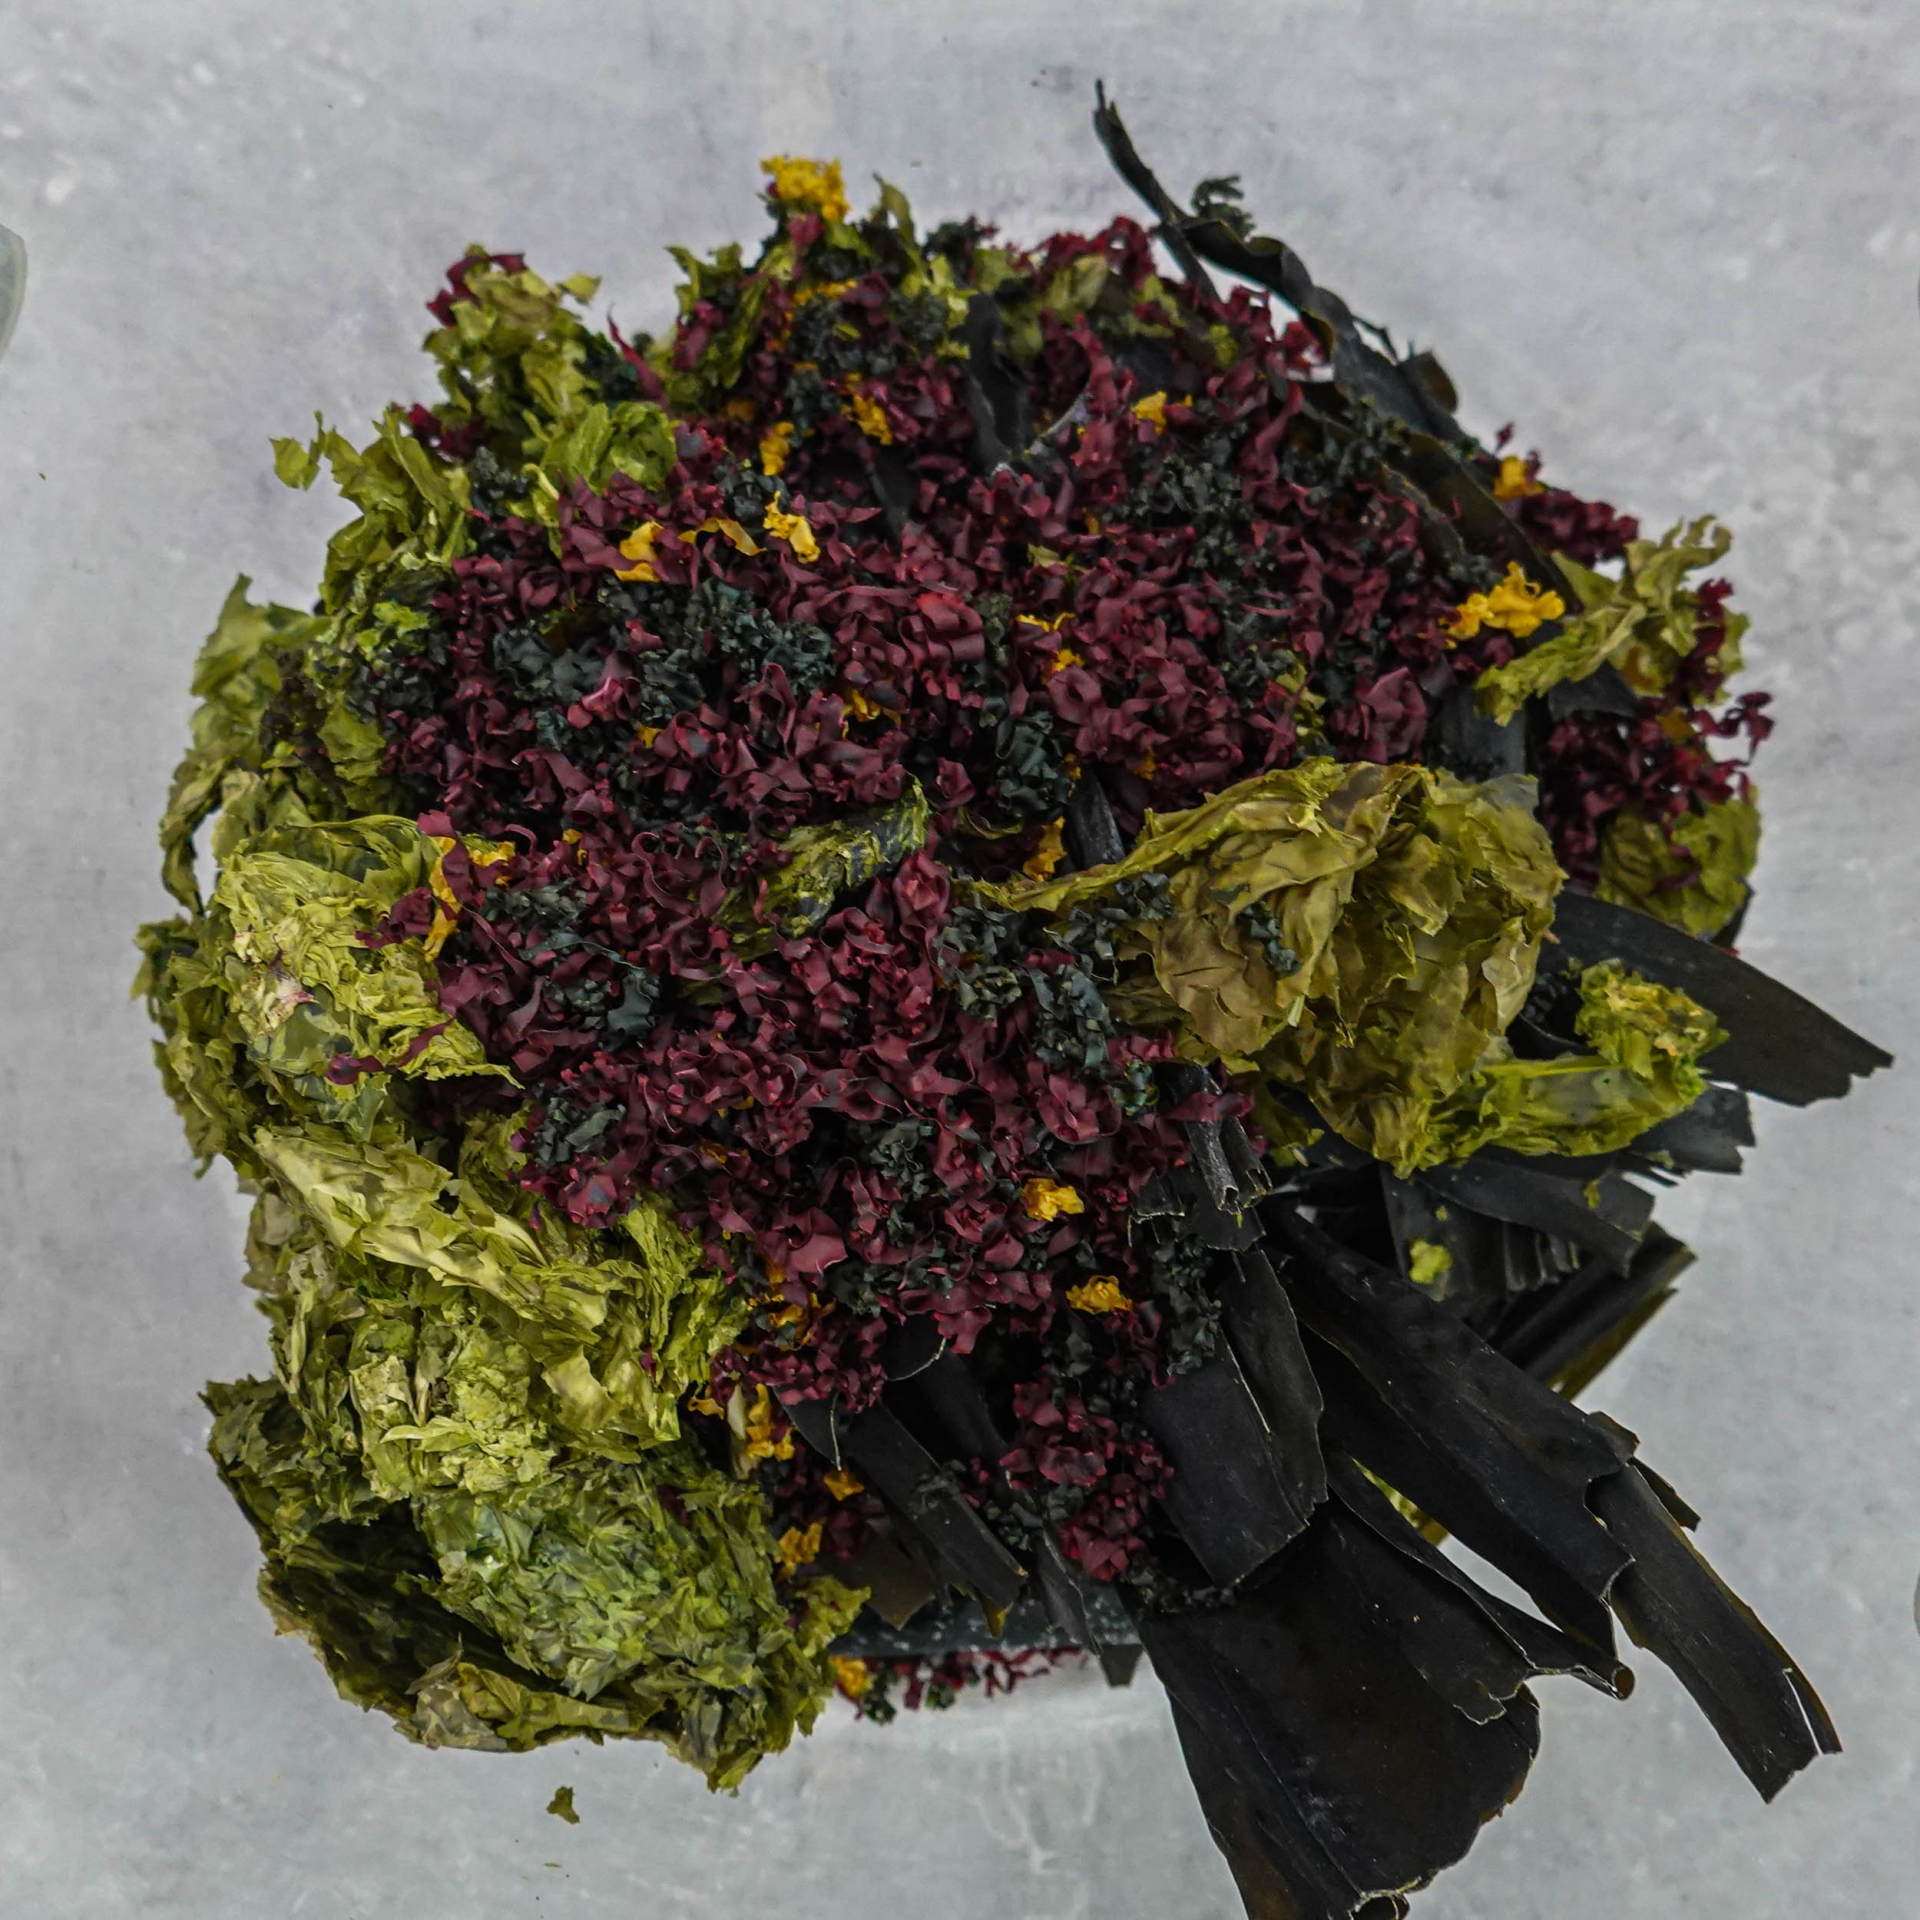 Mixture of dry kombu algae, a sea lettuce and tsonomata algae.